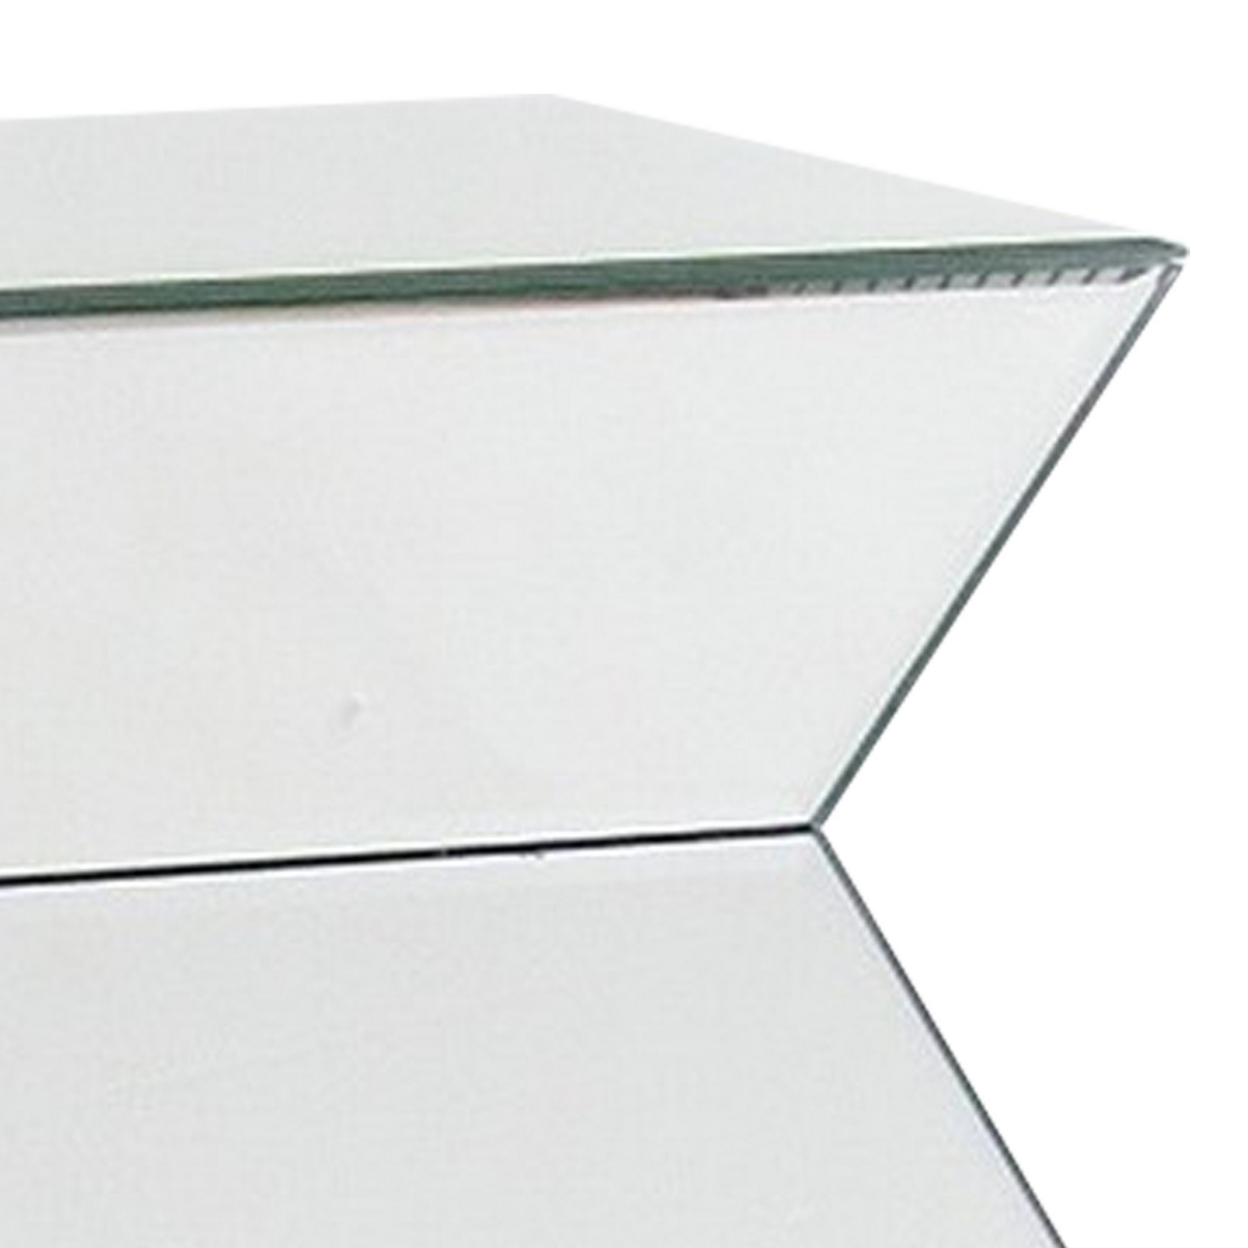 Beveled Mirror Pedestal With Stacked Design, Silver- Saltoro Sherpi